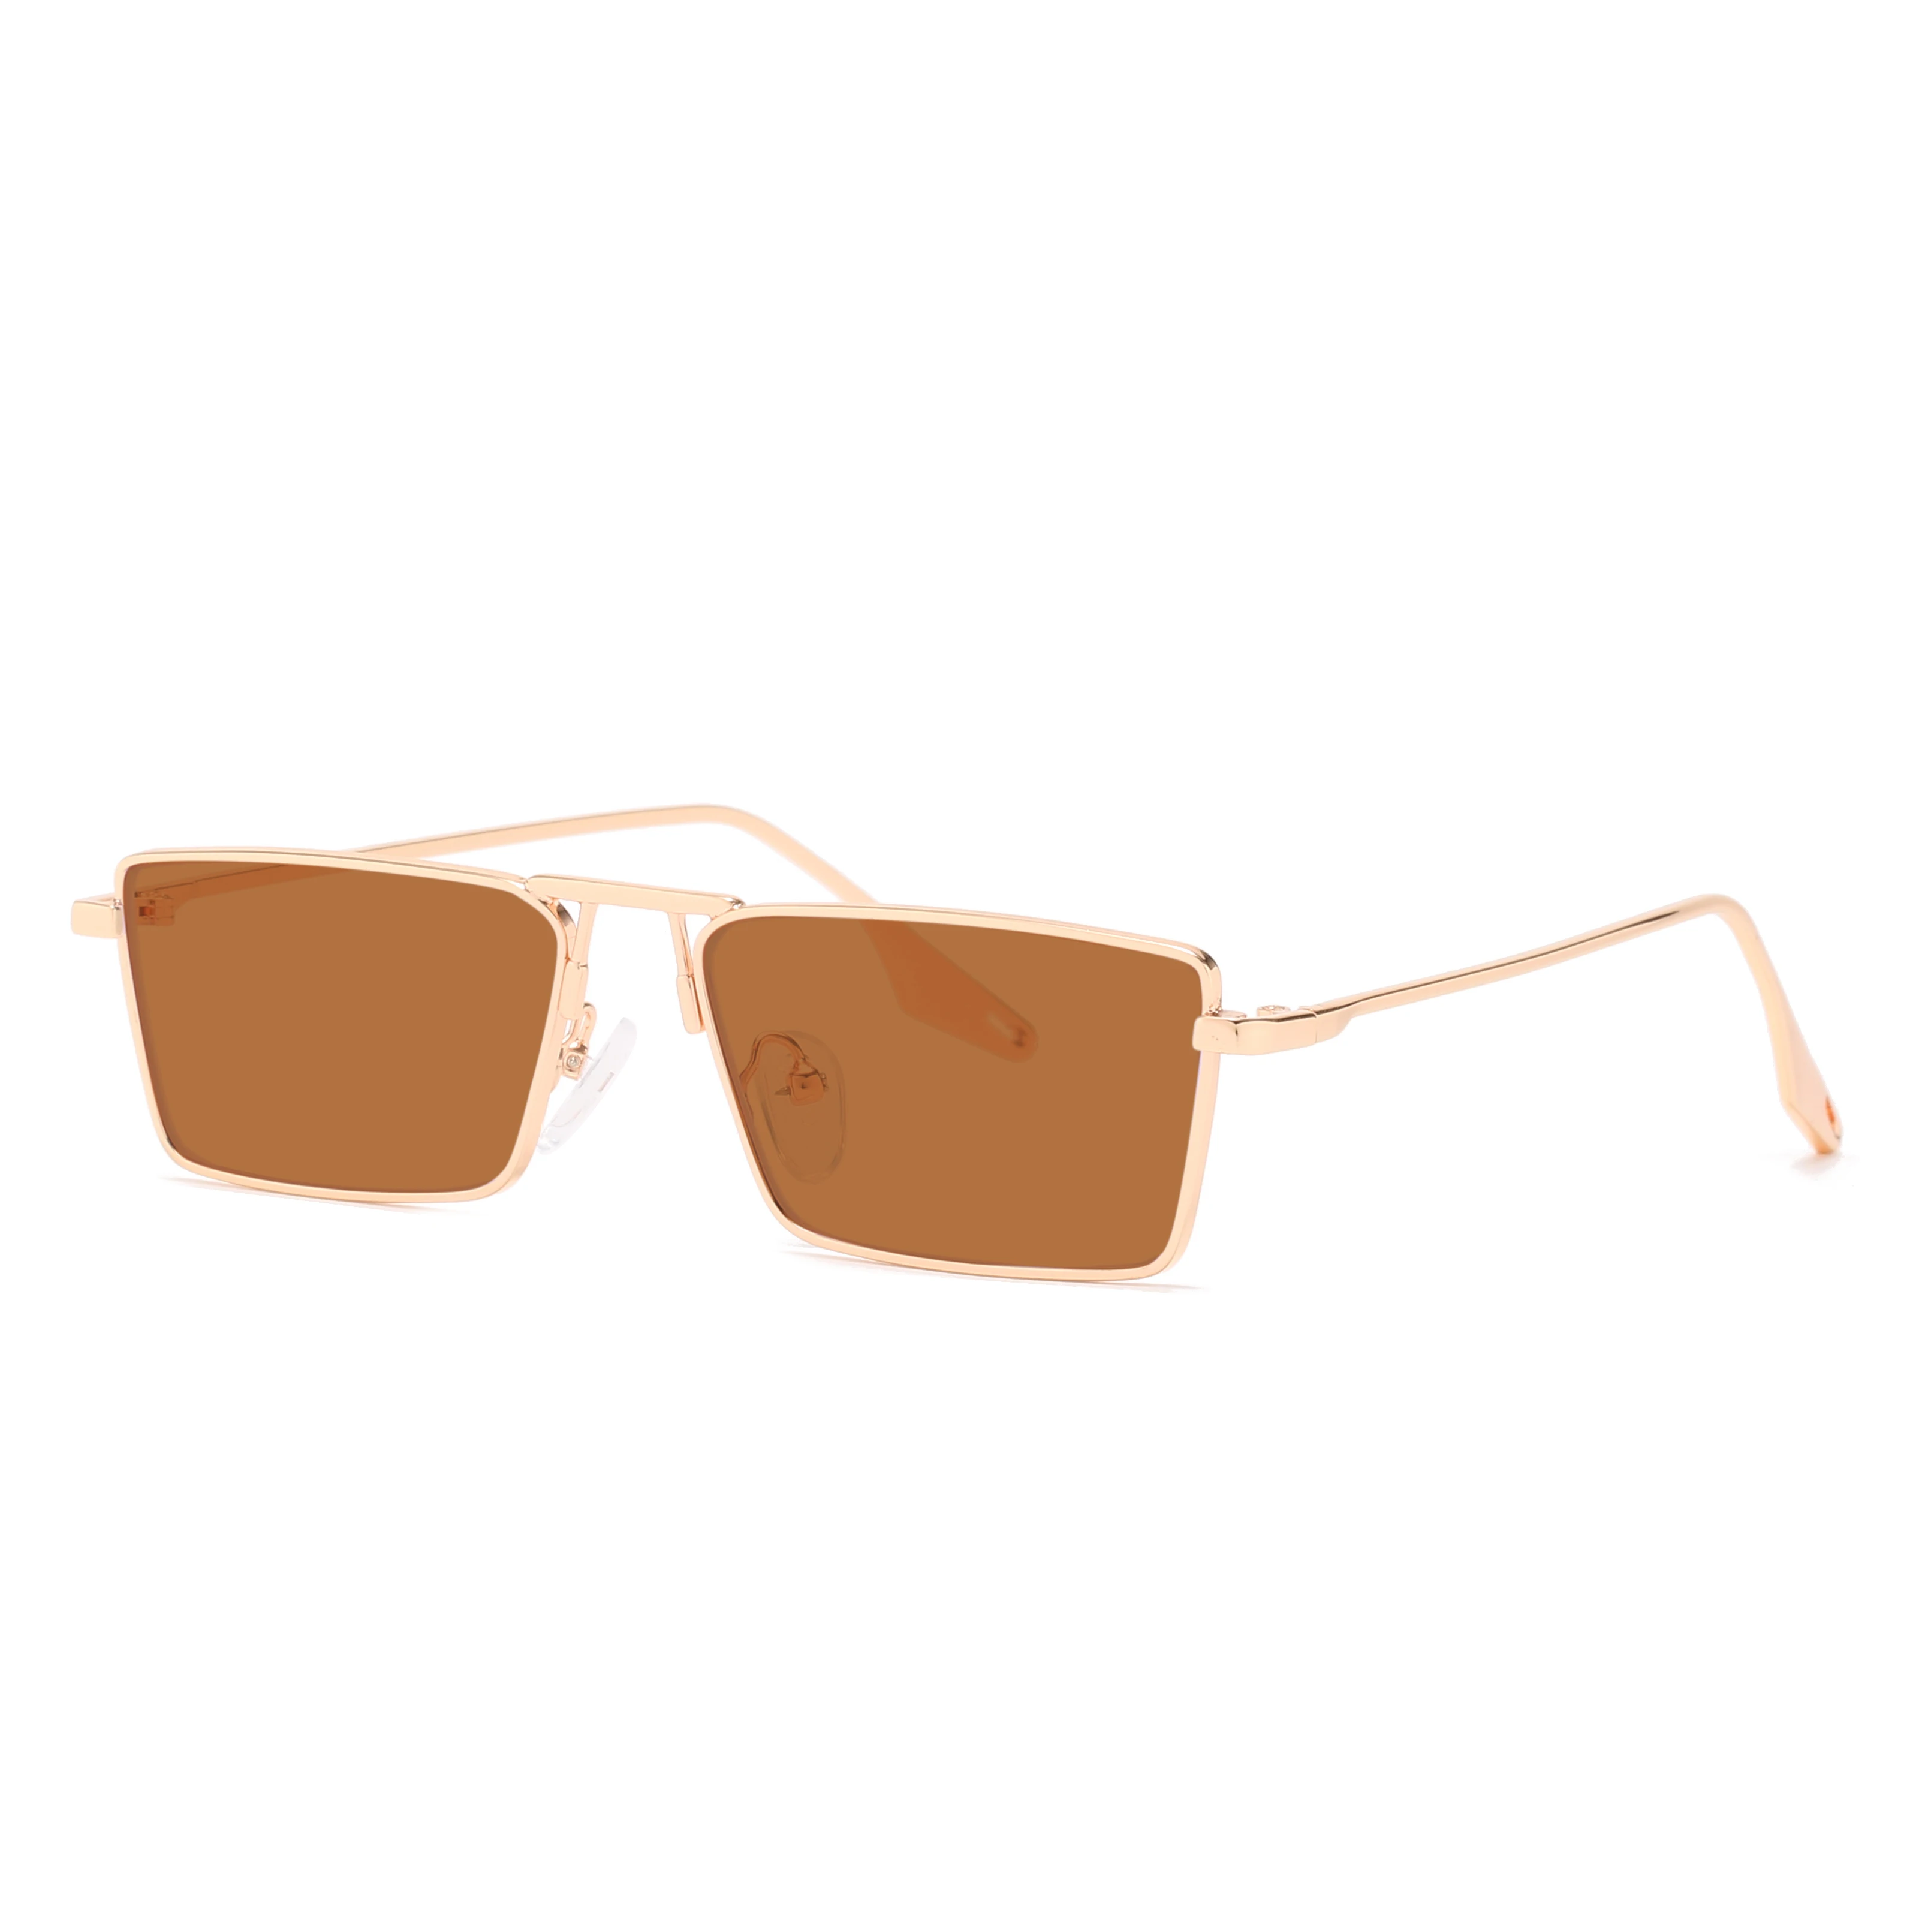 

New uv 400 lentes de sol Blue light glasses river Private label Luxury sunglasses for men